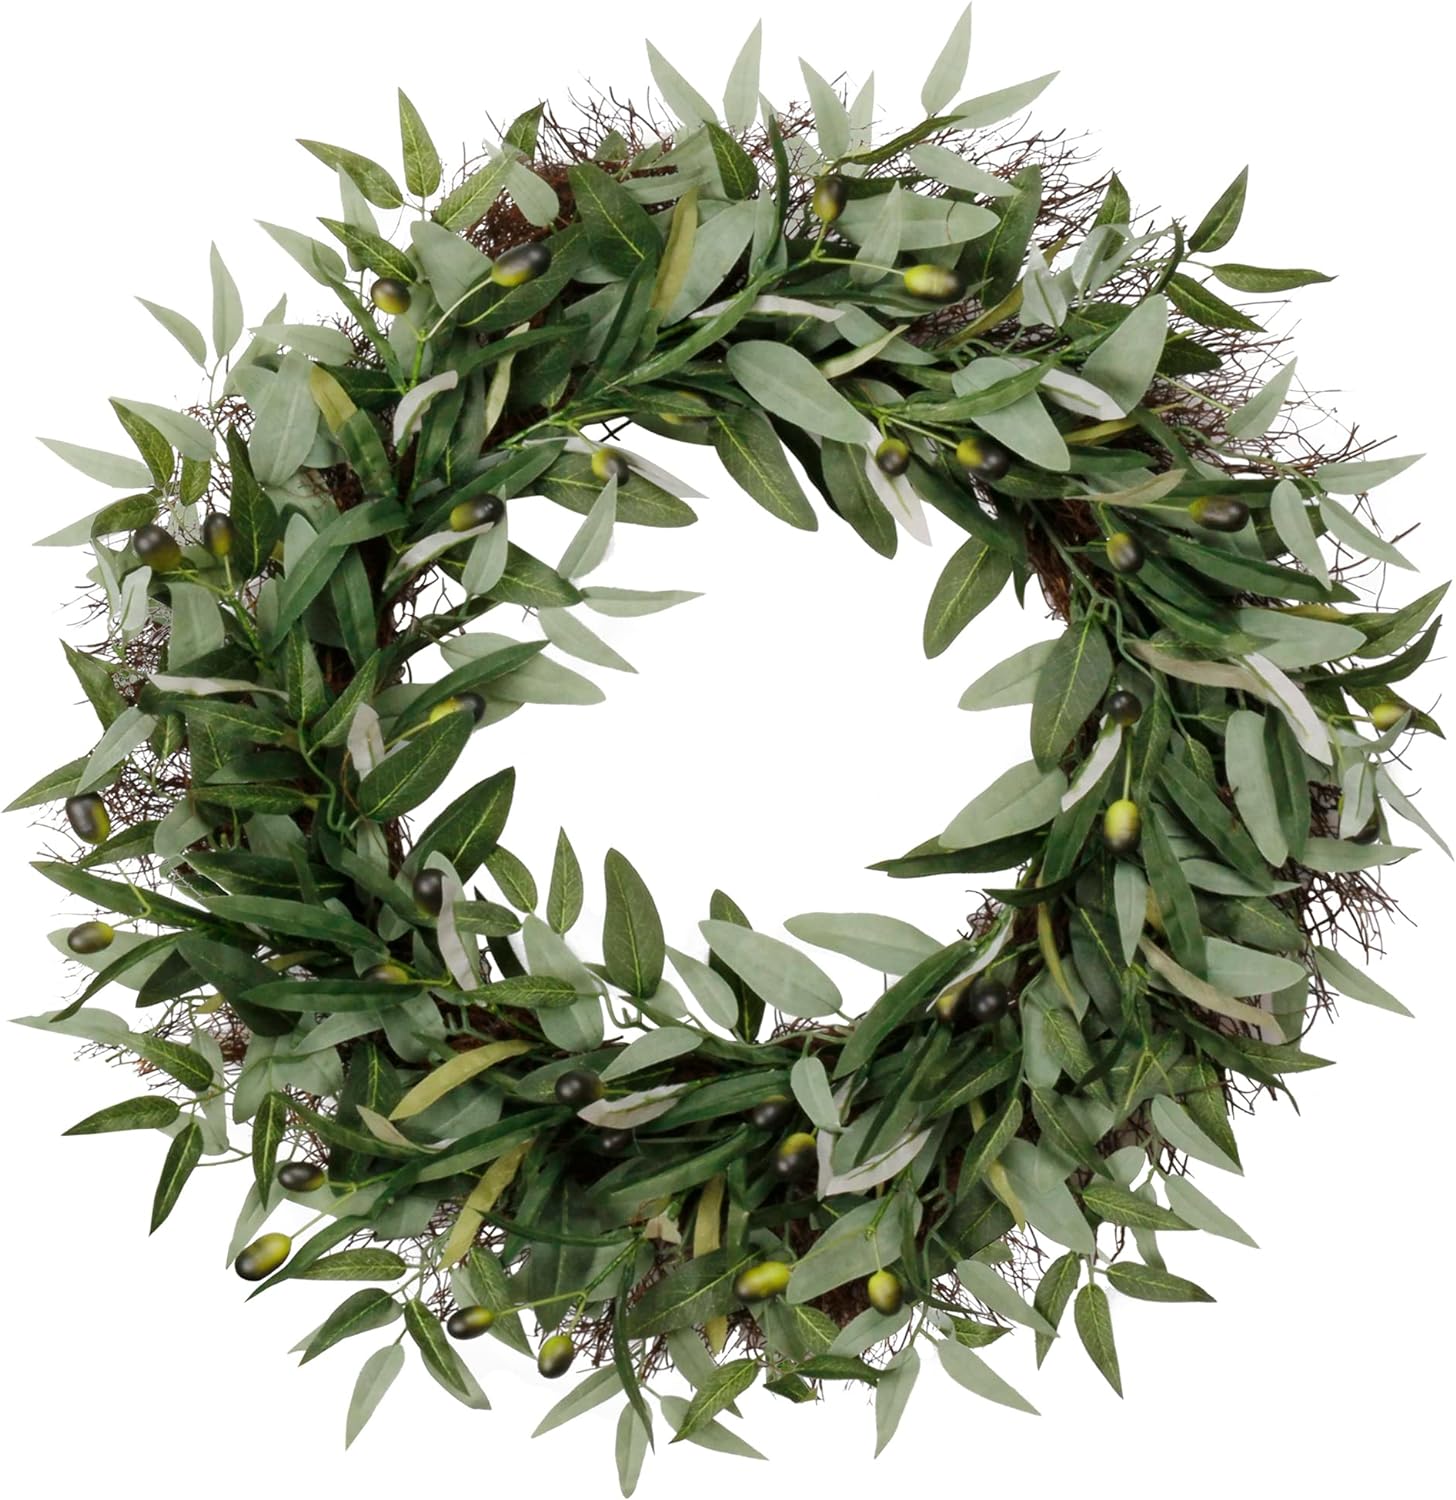 Olive wreath